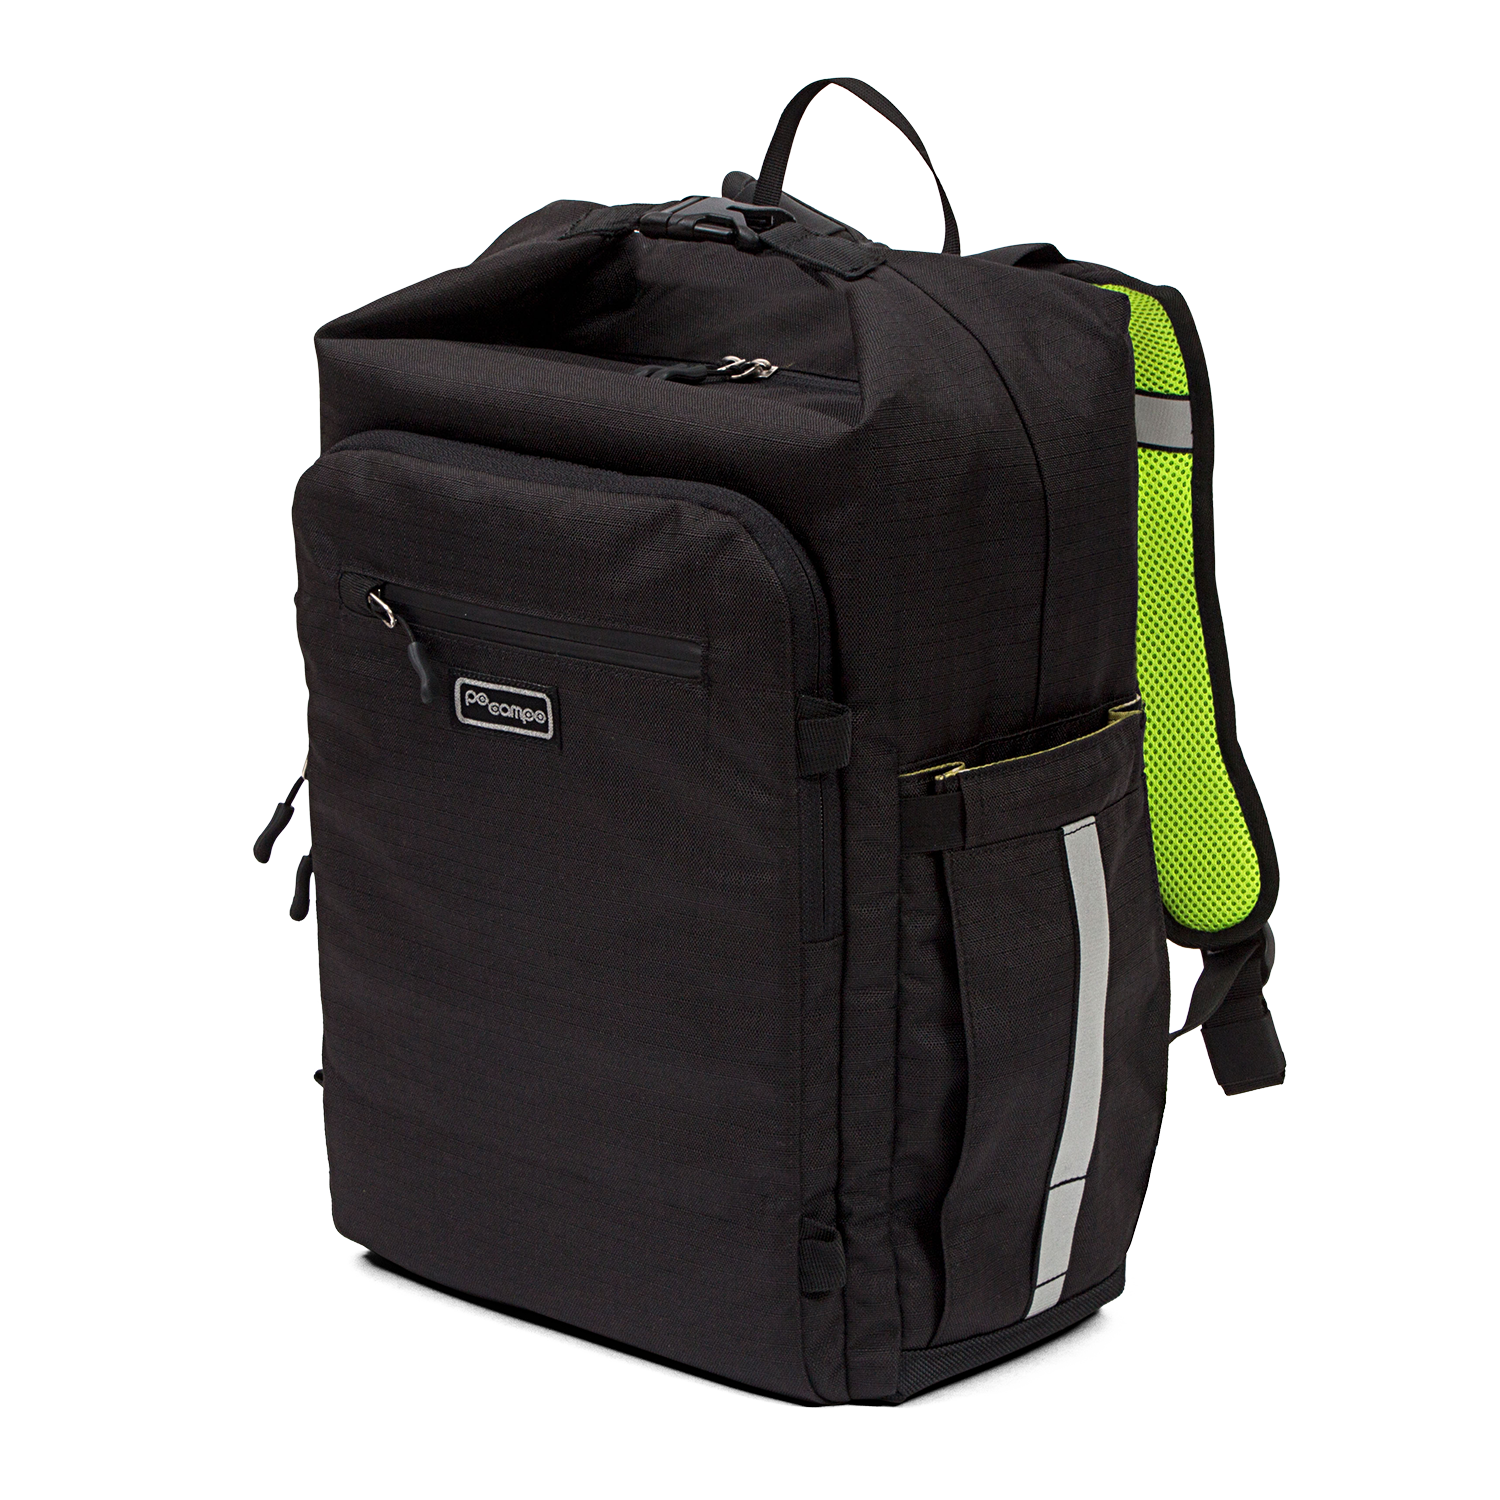 Bedford Backpack Pannier color:black ripstop;